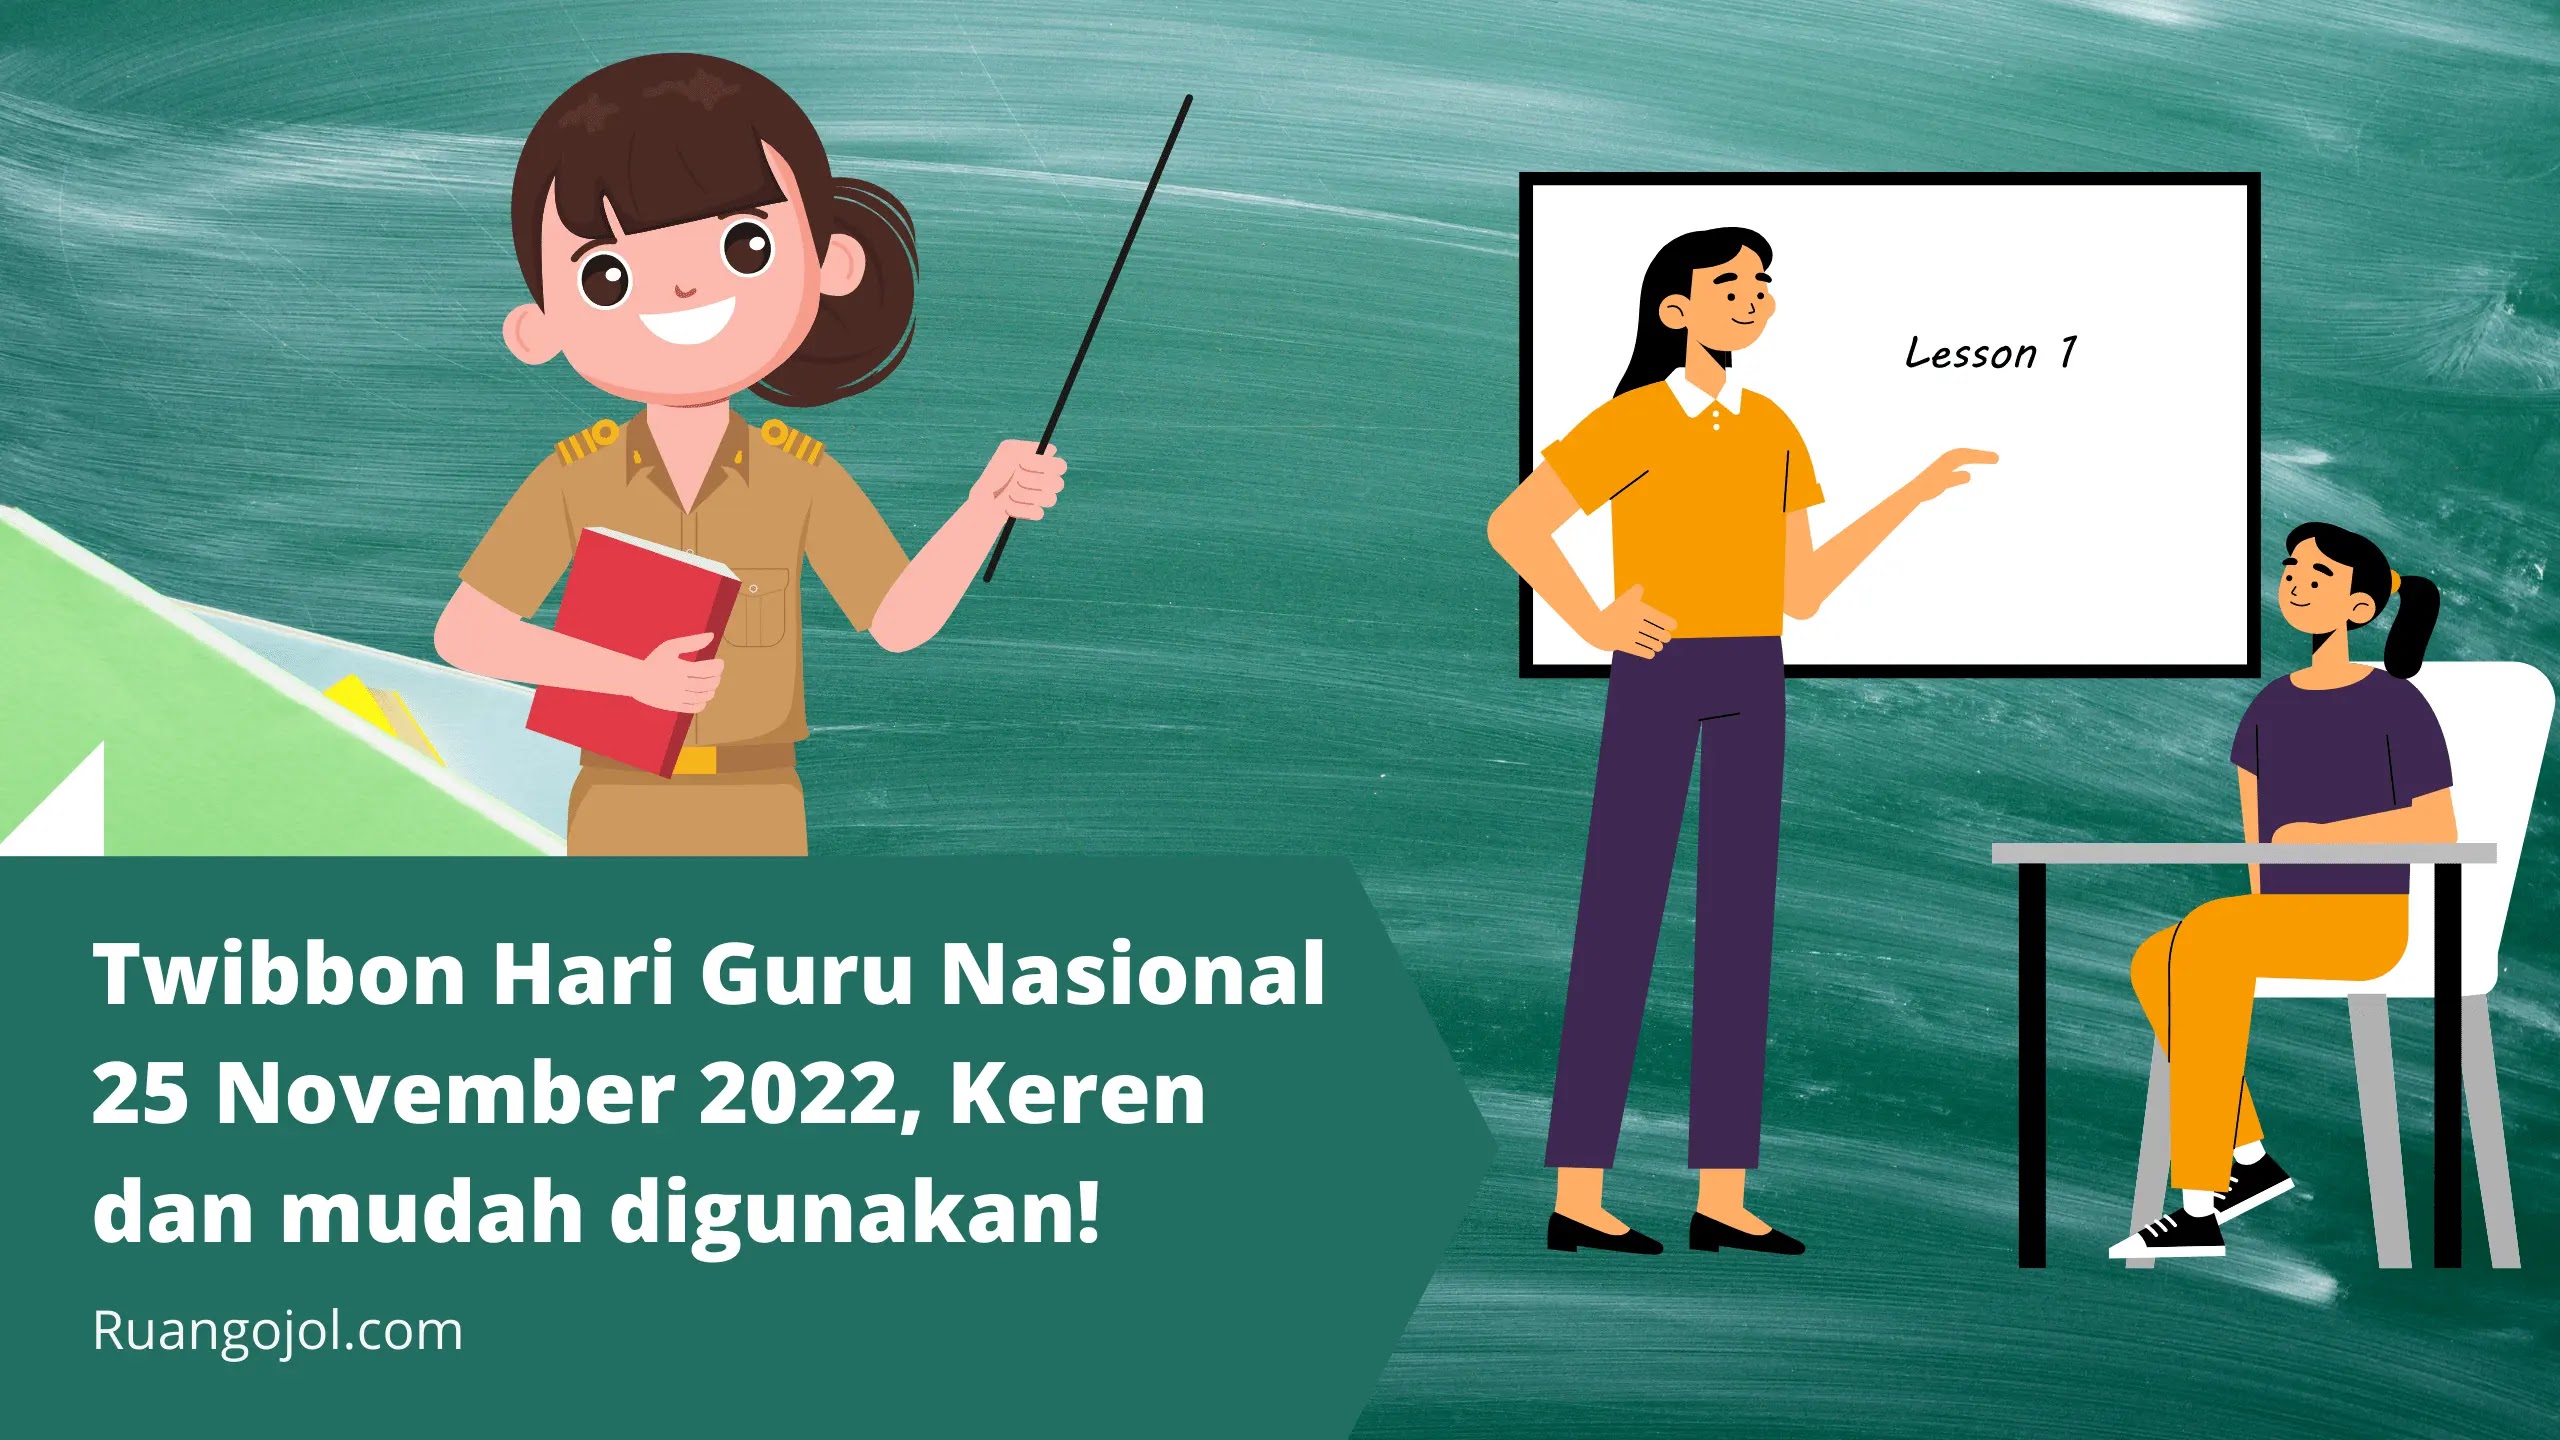 Twibbon Hari Guru Nasional 2022